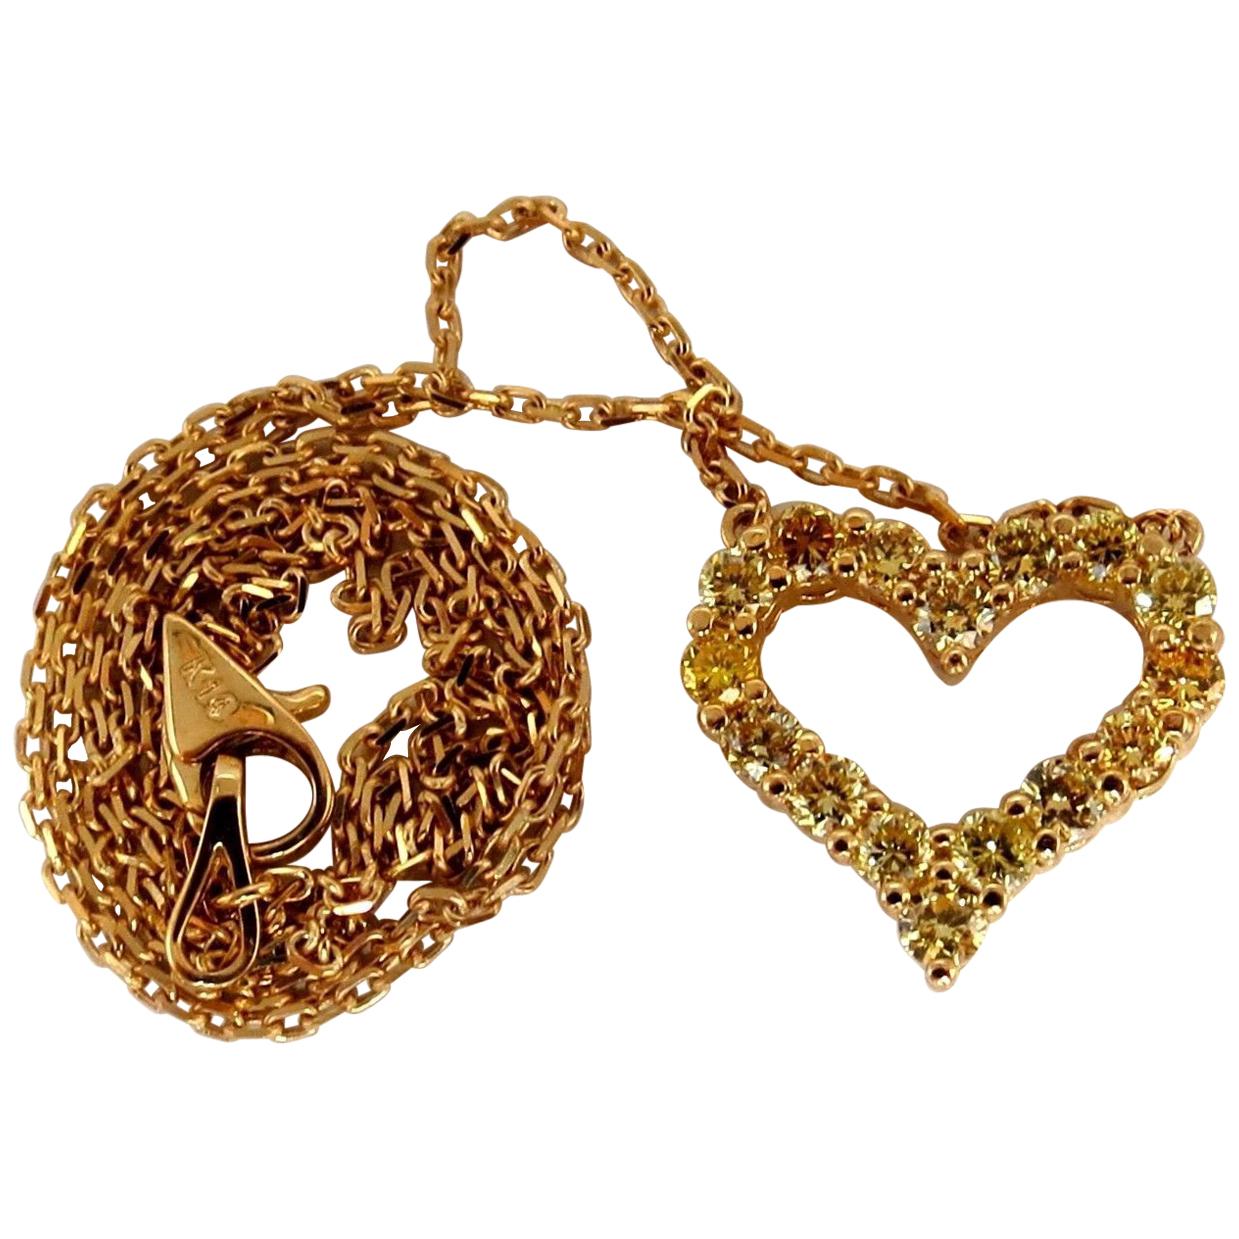 1.00 Carat Natural Fancy Yellow Diamonds Open Heart Necklace 14 Karat